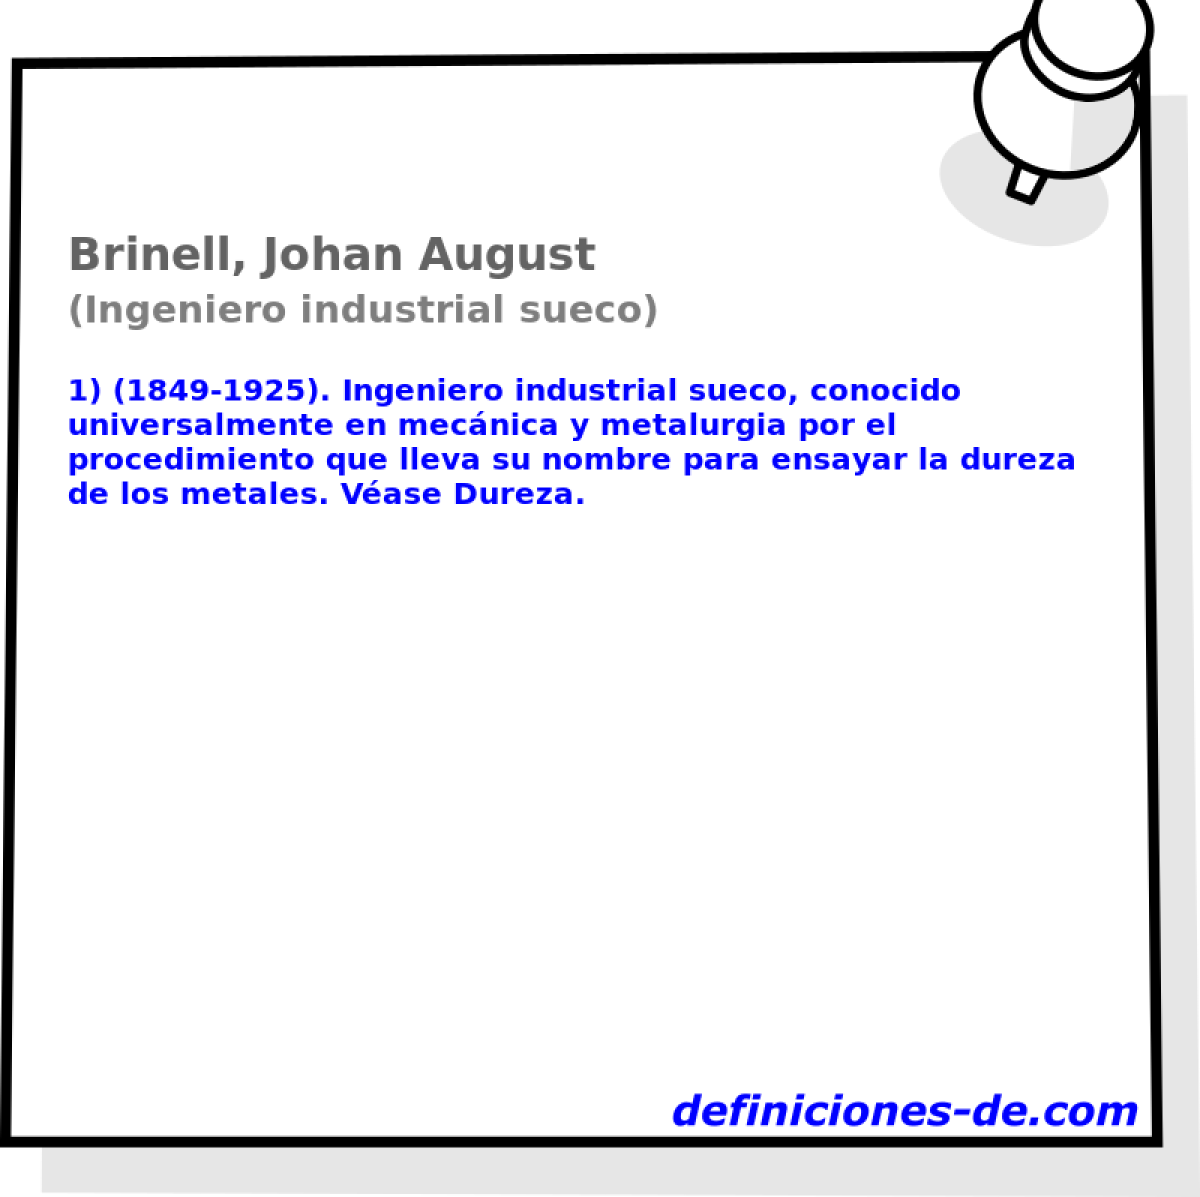 Brinell, Johan August (Ingeniero industrial sueco)